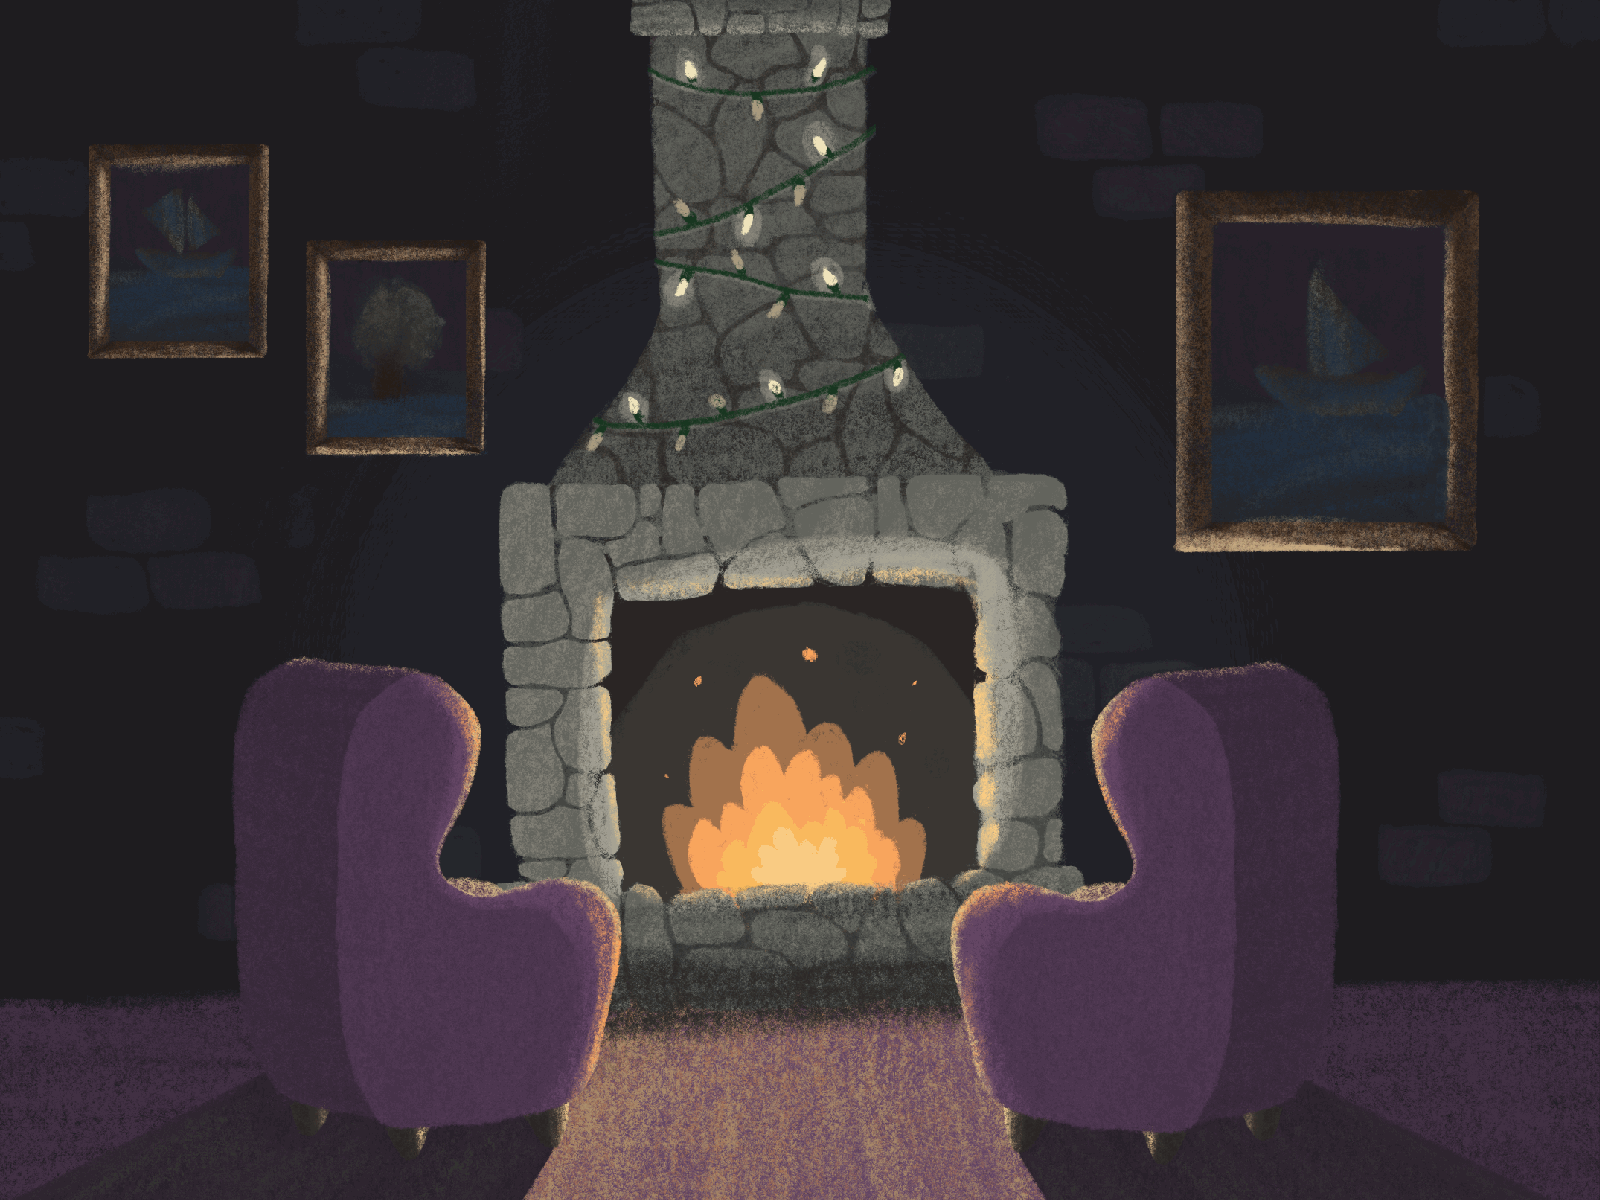 Fireplace evening